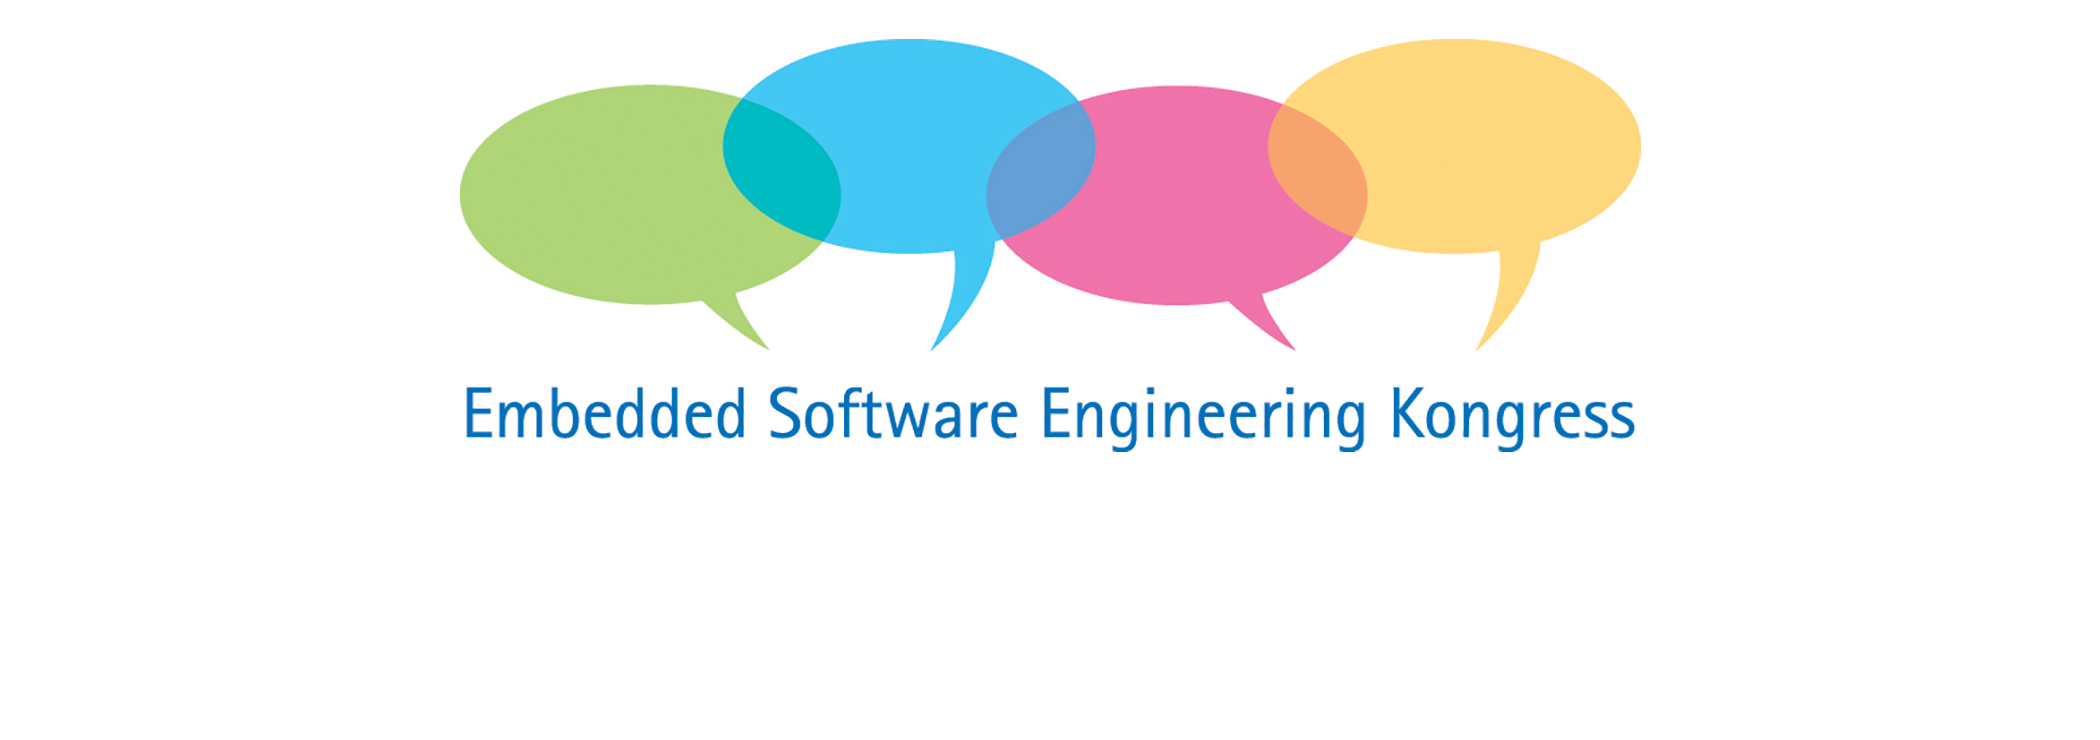 Embedded Software Engineering Kongress Logo